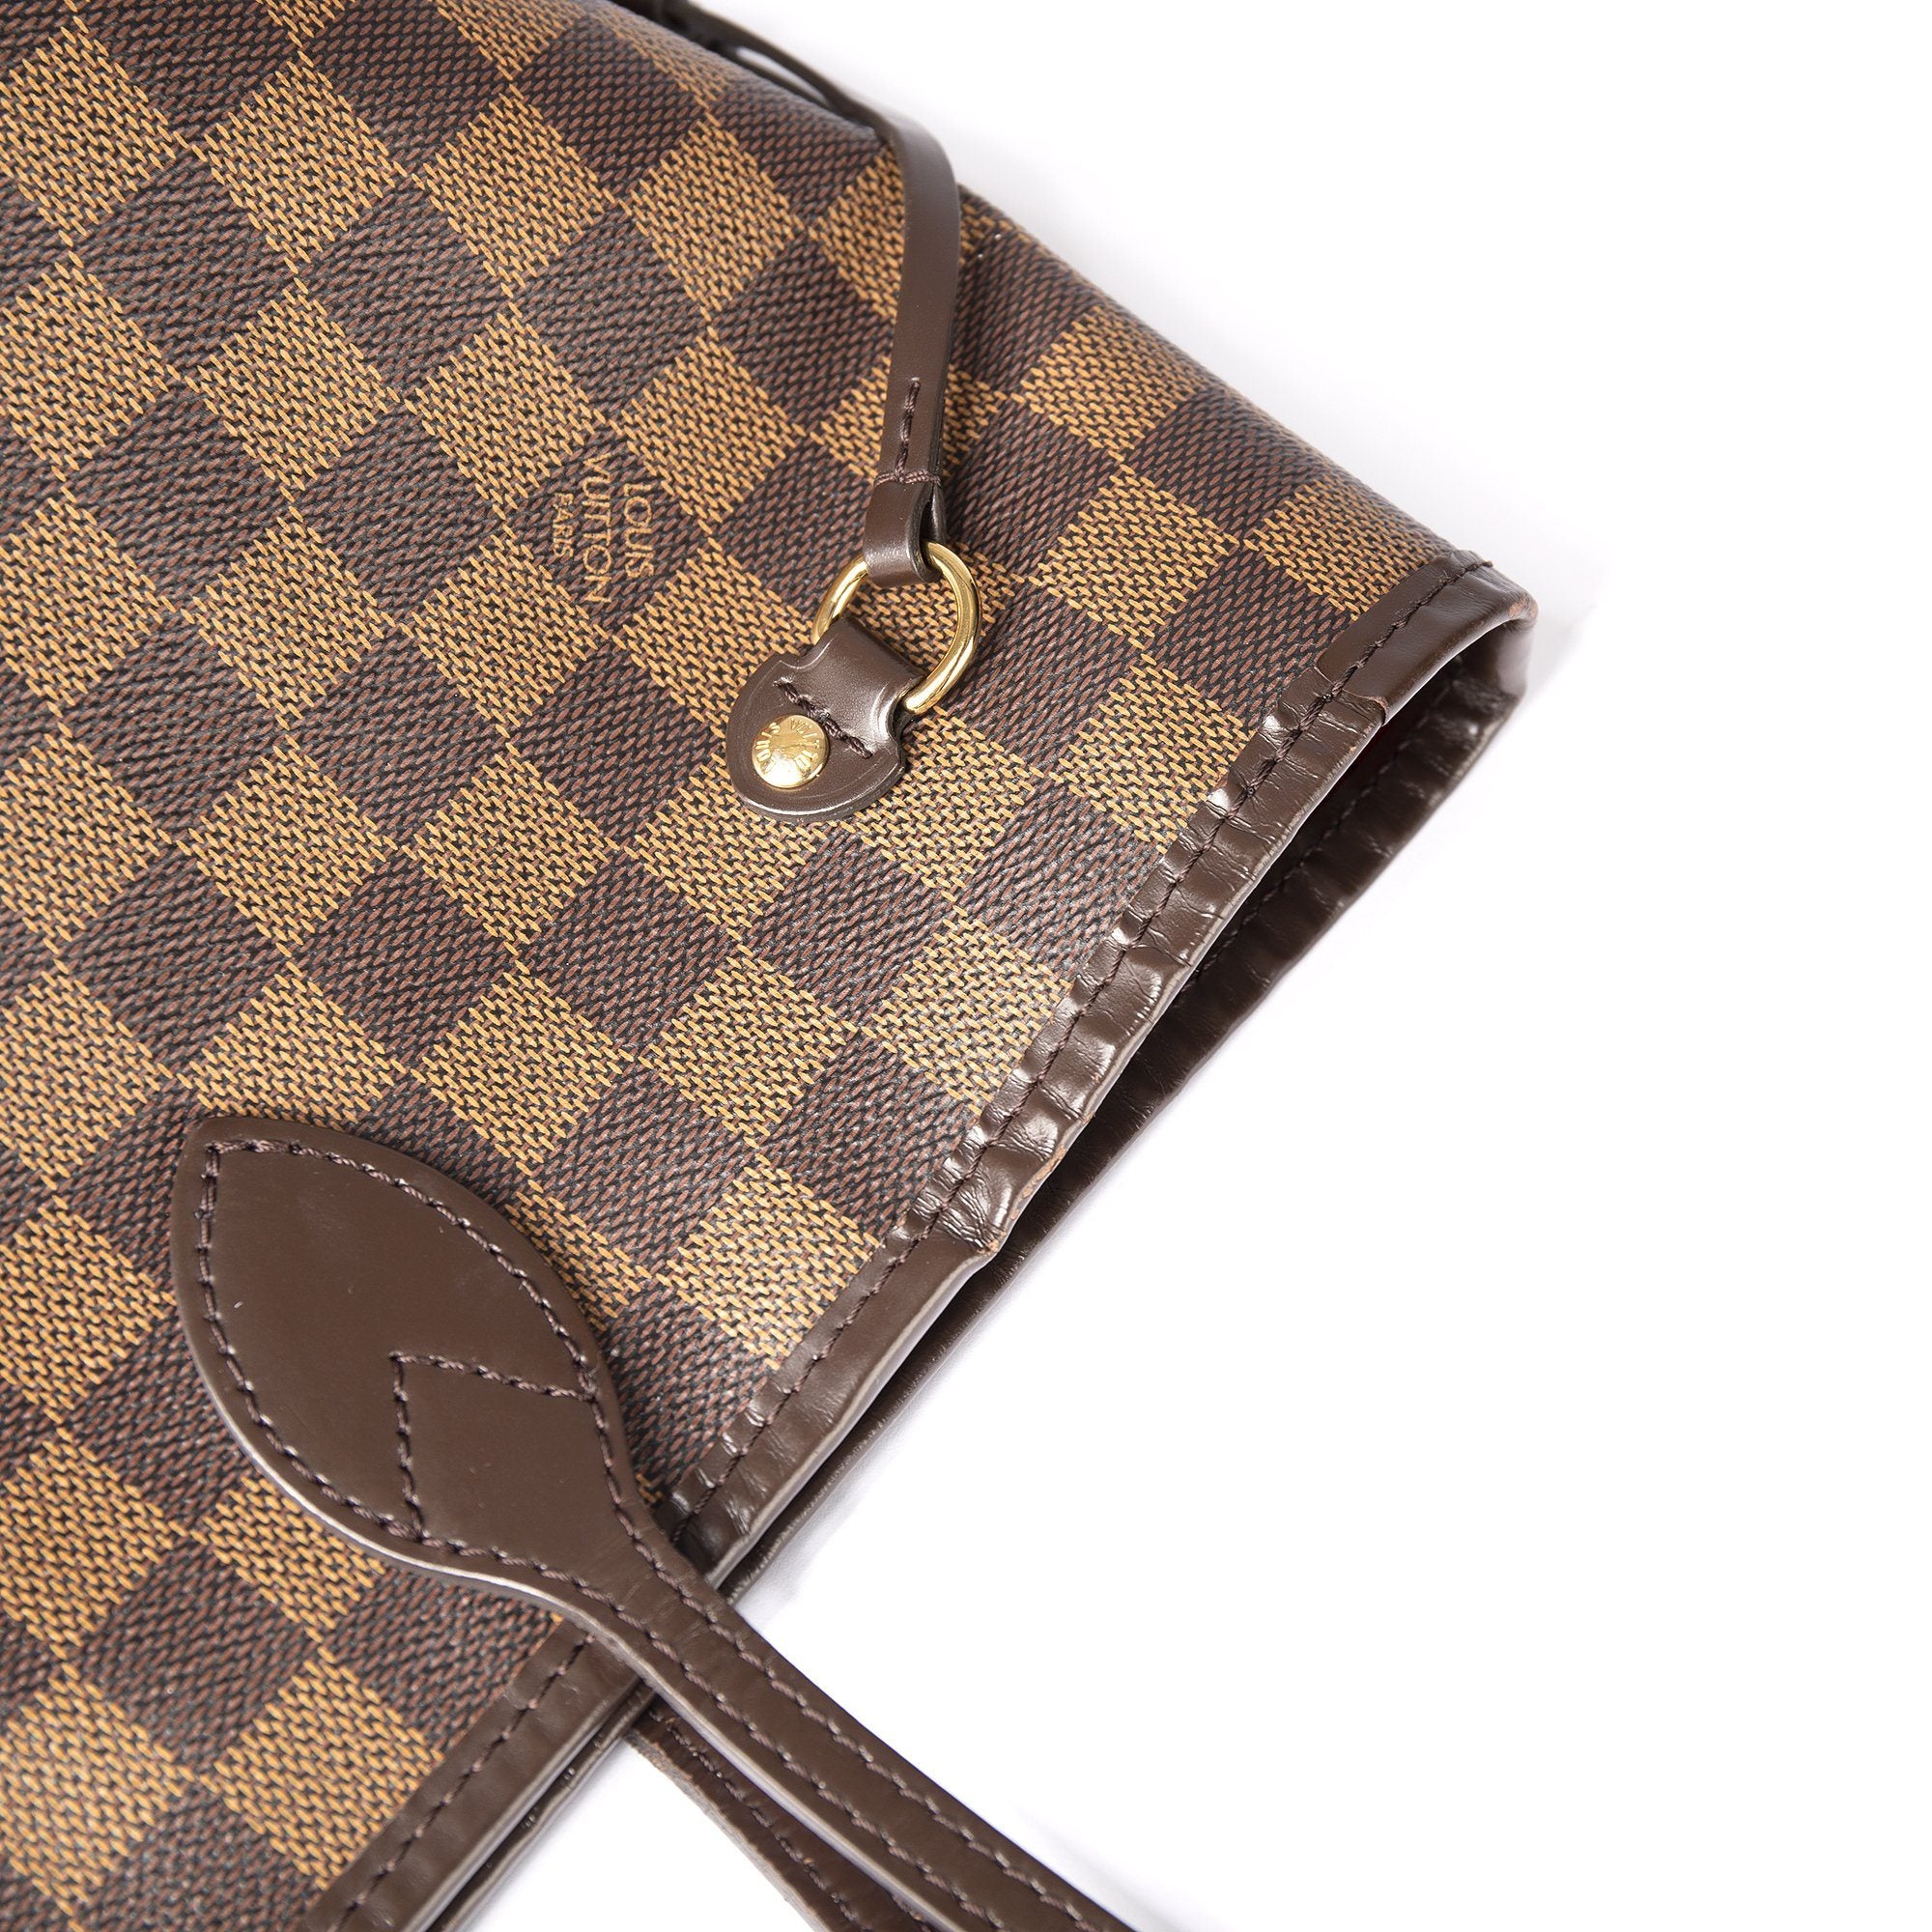 Profits soar at Dublin's Louis Vuitton store where a handbag can